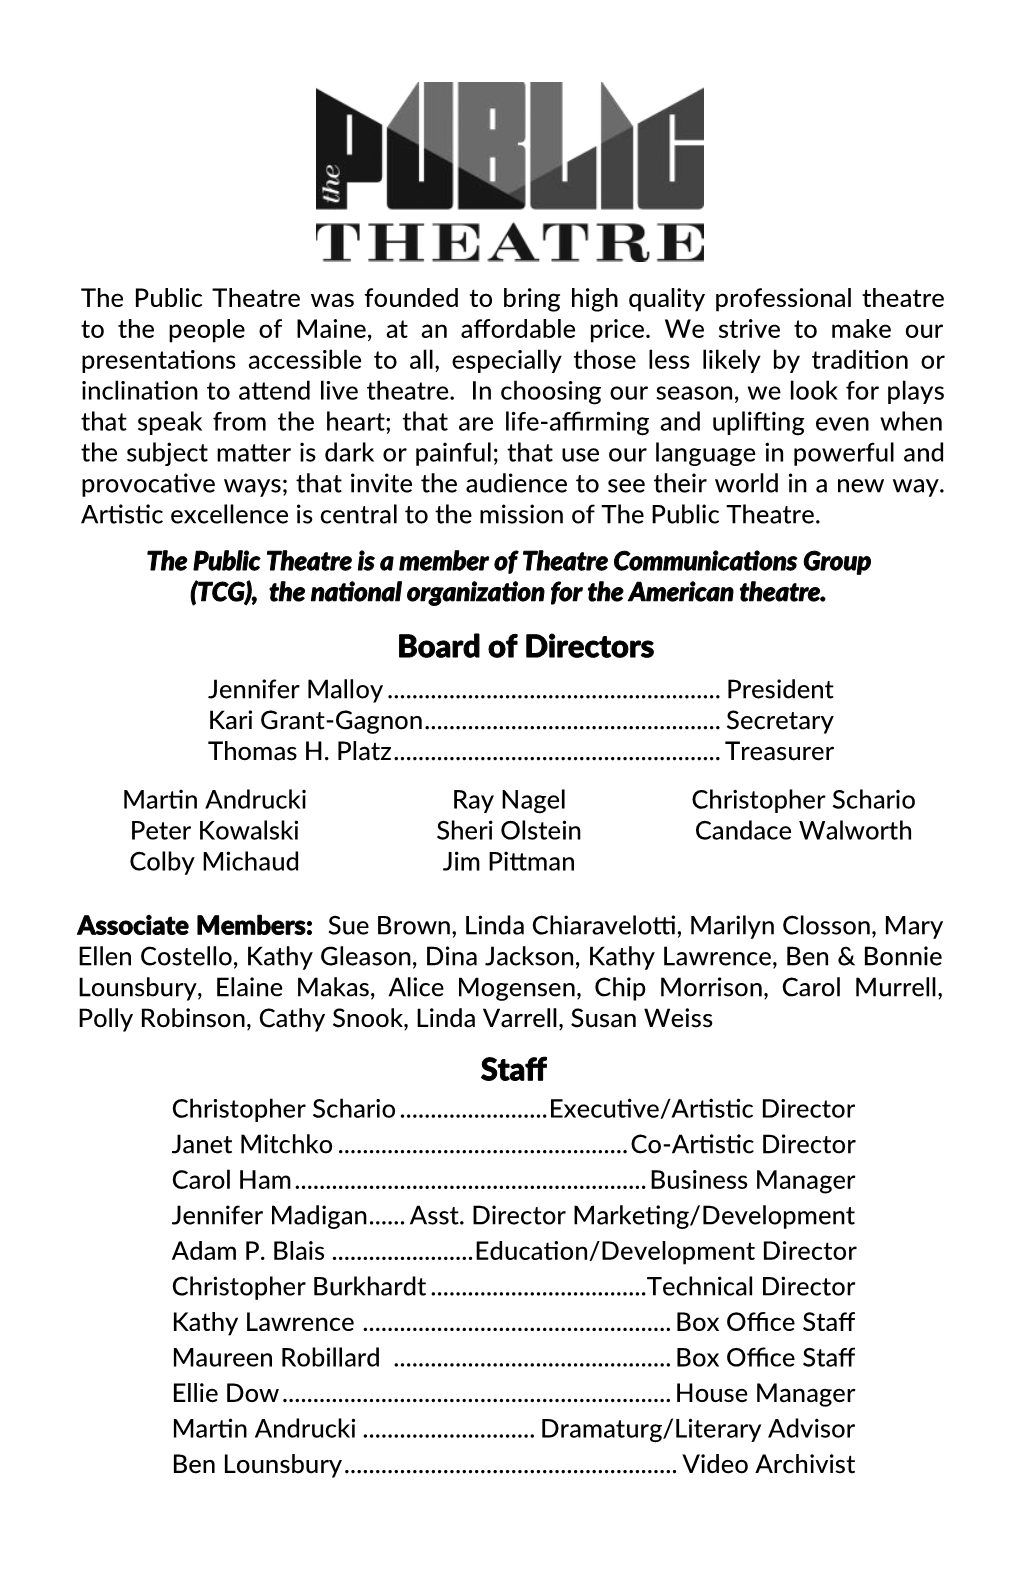 Staff Board of Directors